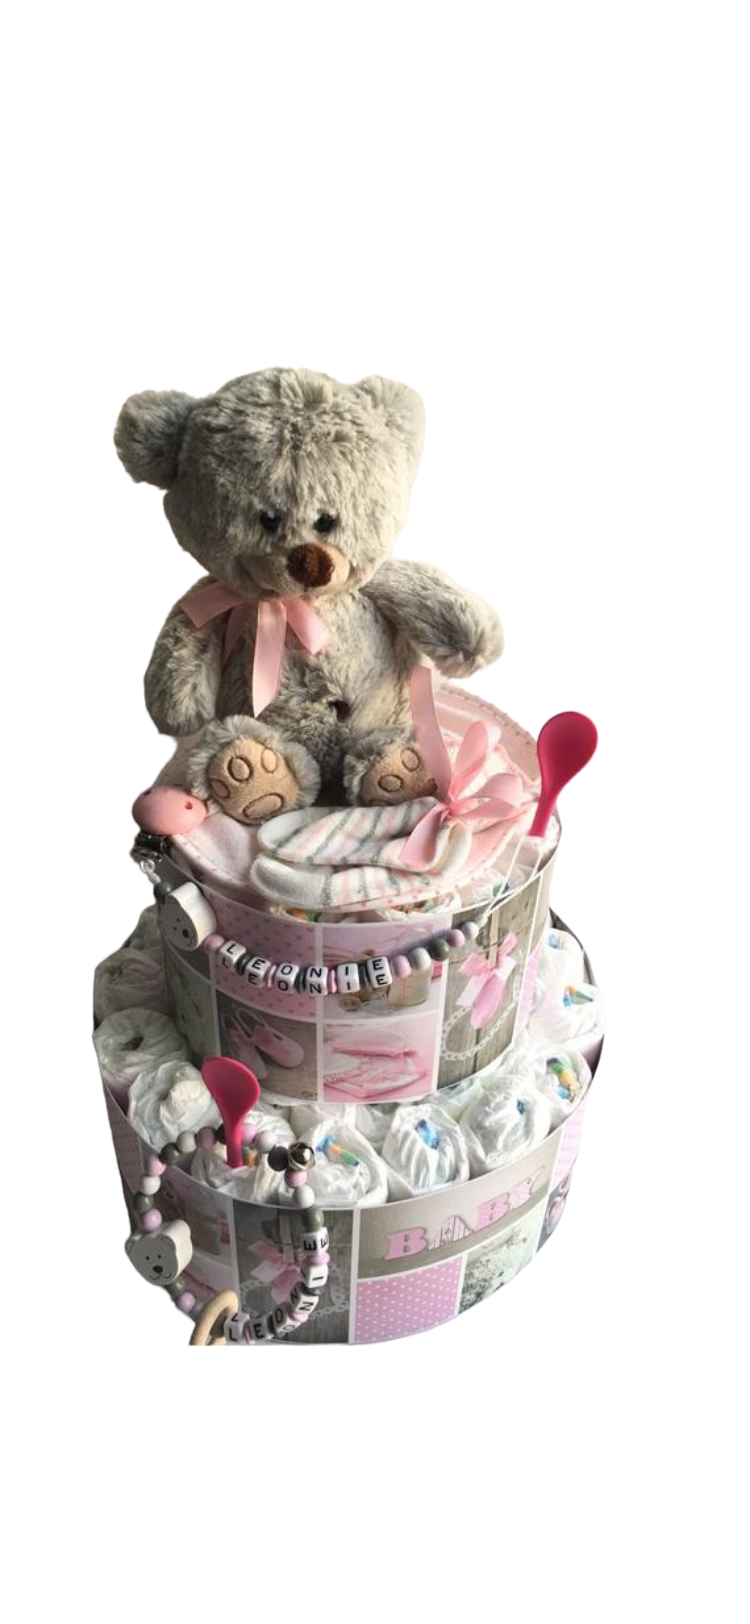  - Windeltorte Baby Girl Mädchen Bär Teddy personalisiert mit Name Geschenk Taufe Geburt Babyparty   (Kopie id: 100315361) (Kopie id: 100320075)